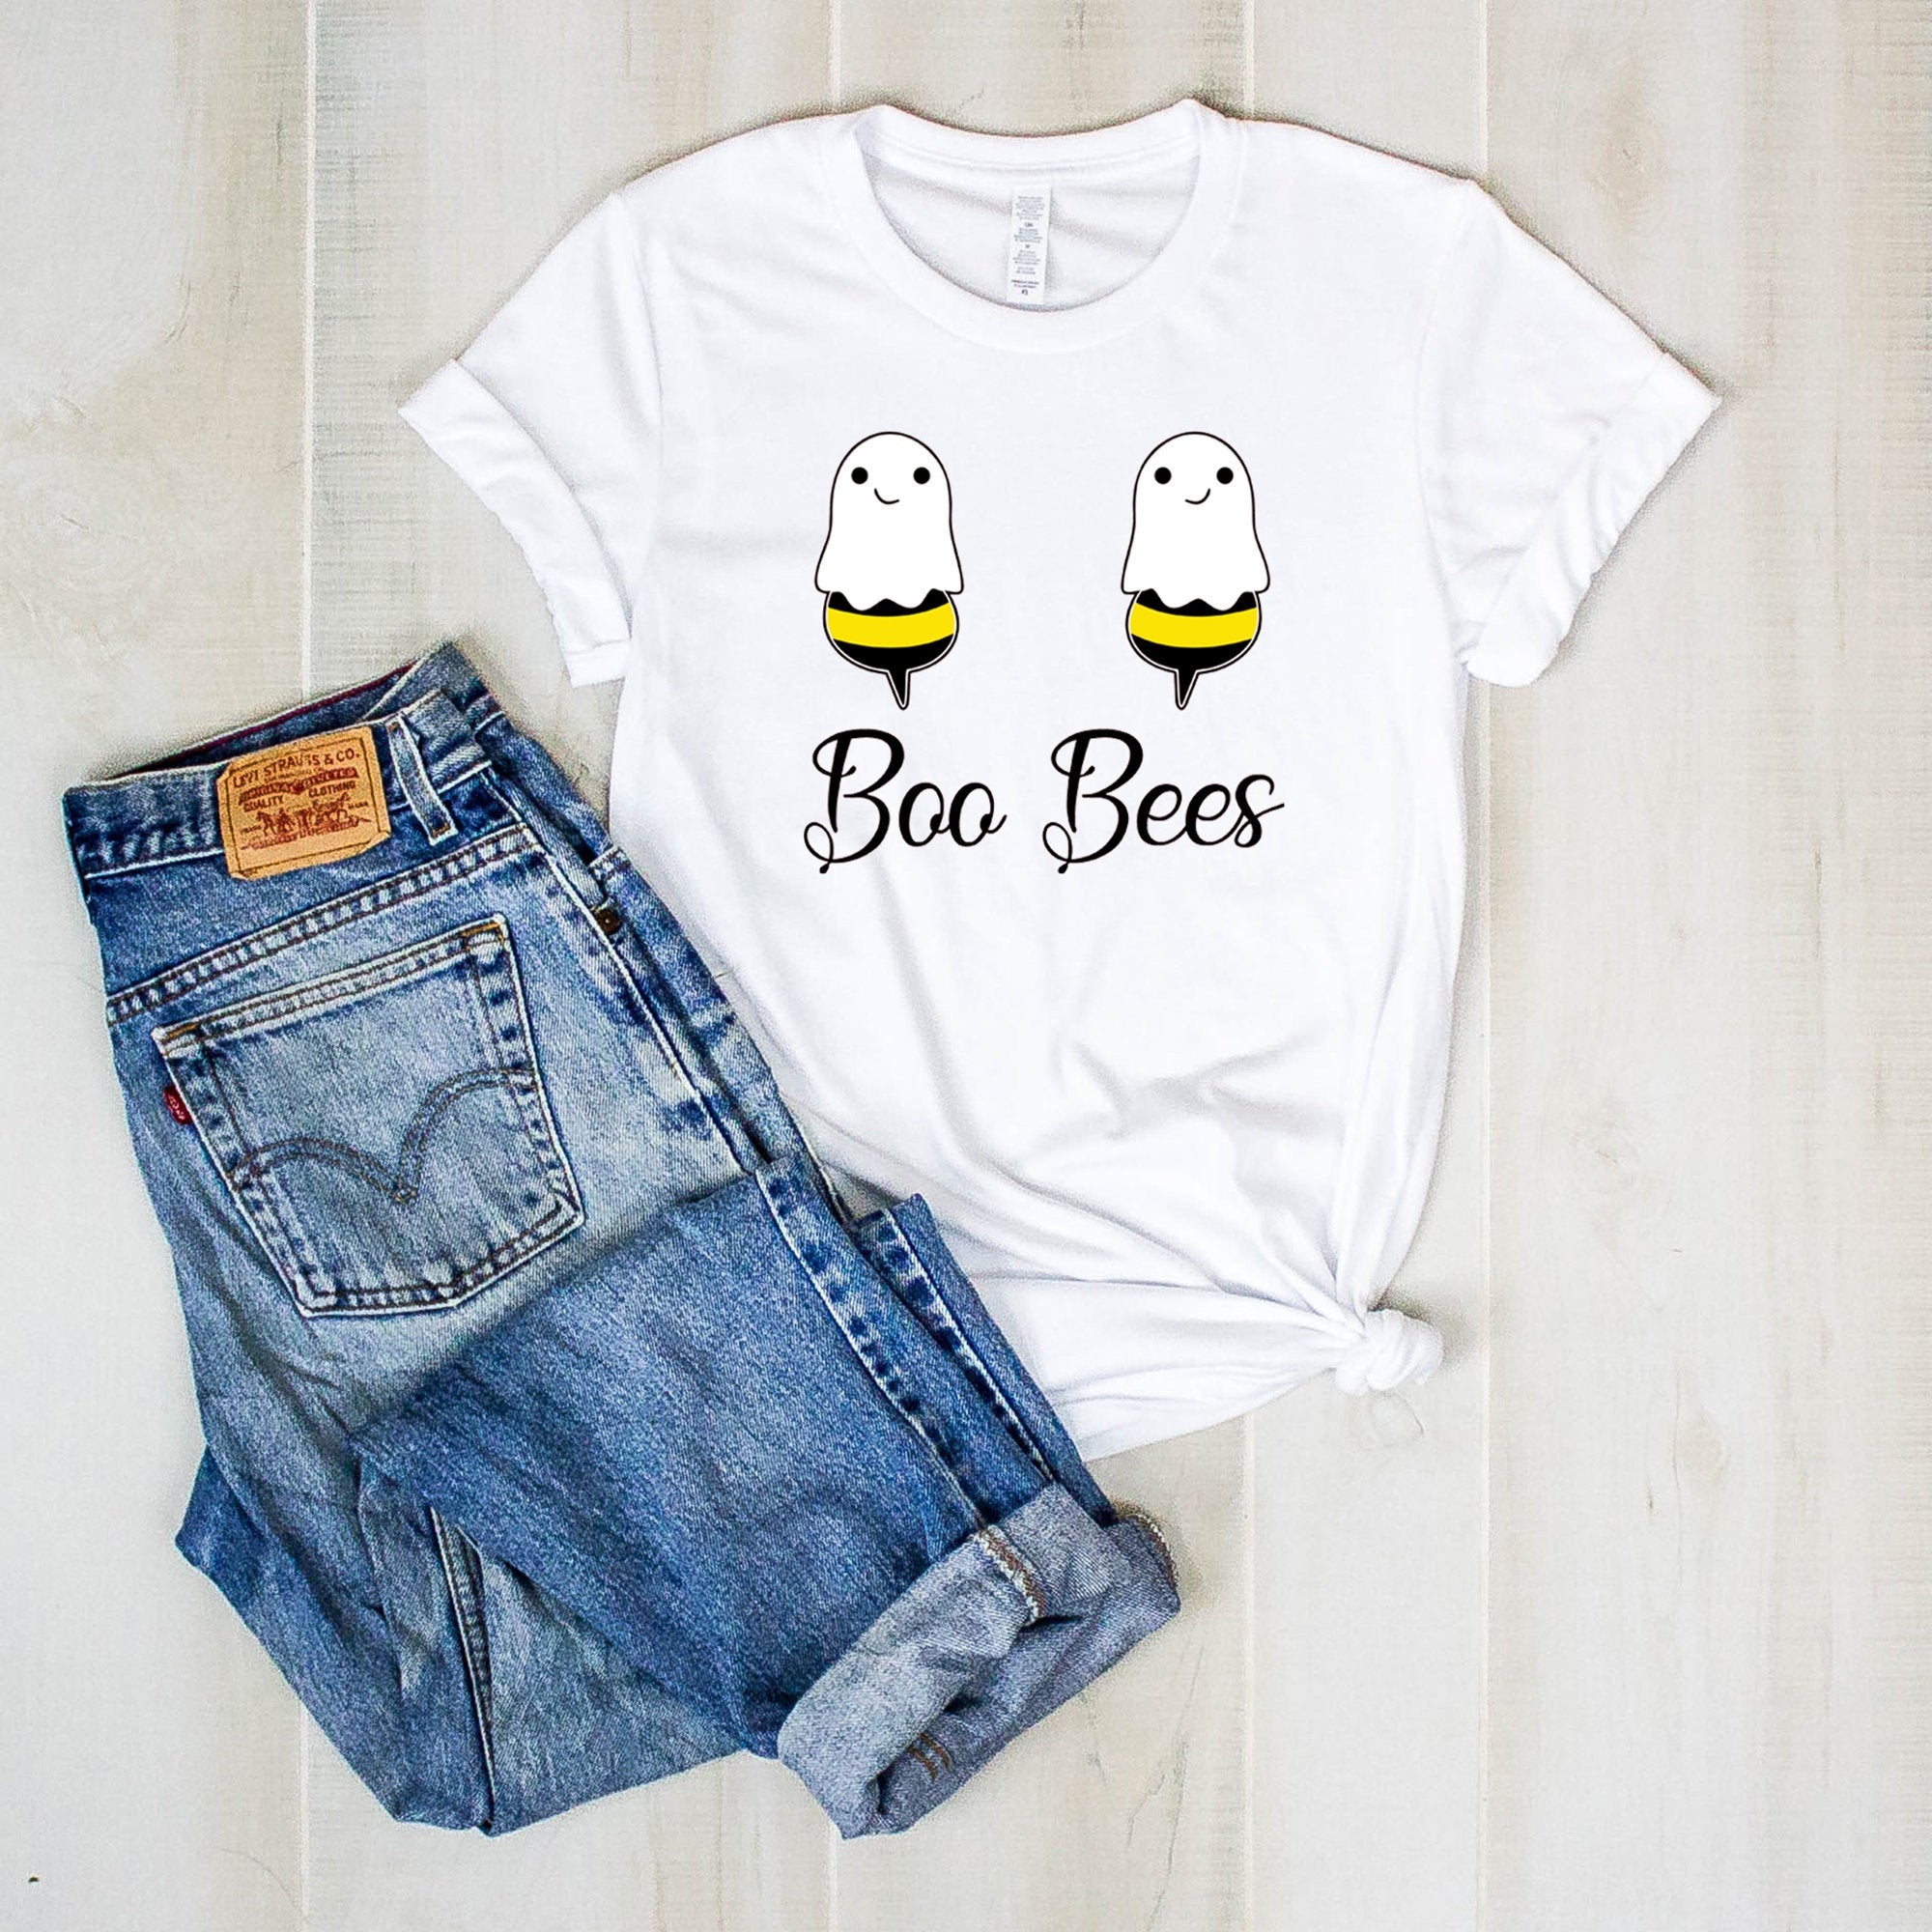 BOO BIES Boobies Boobs Halloween T-shirt women 100% Cotton tumblr